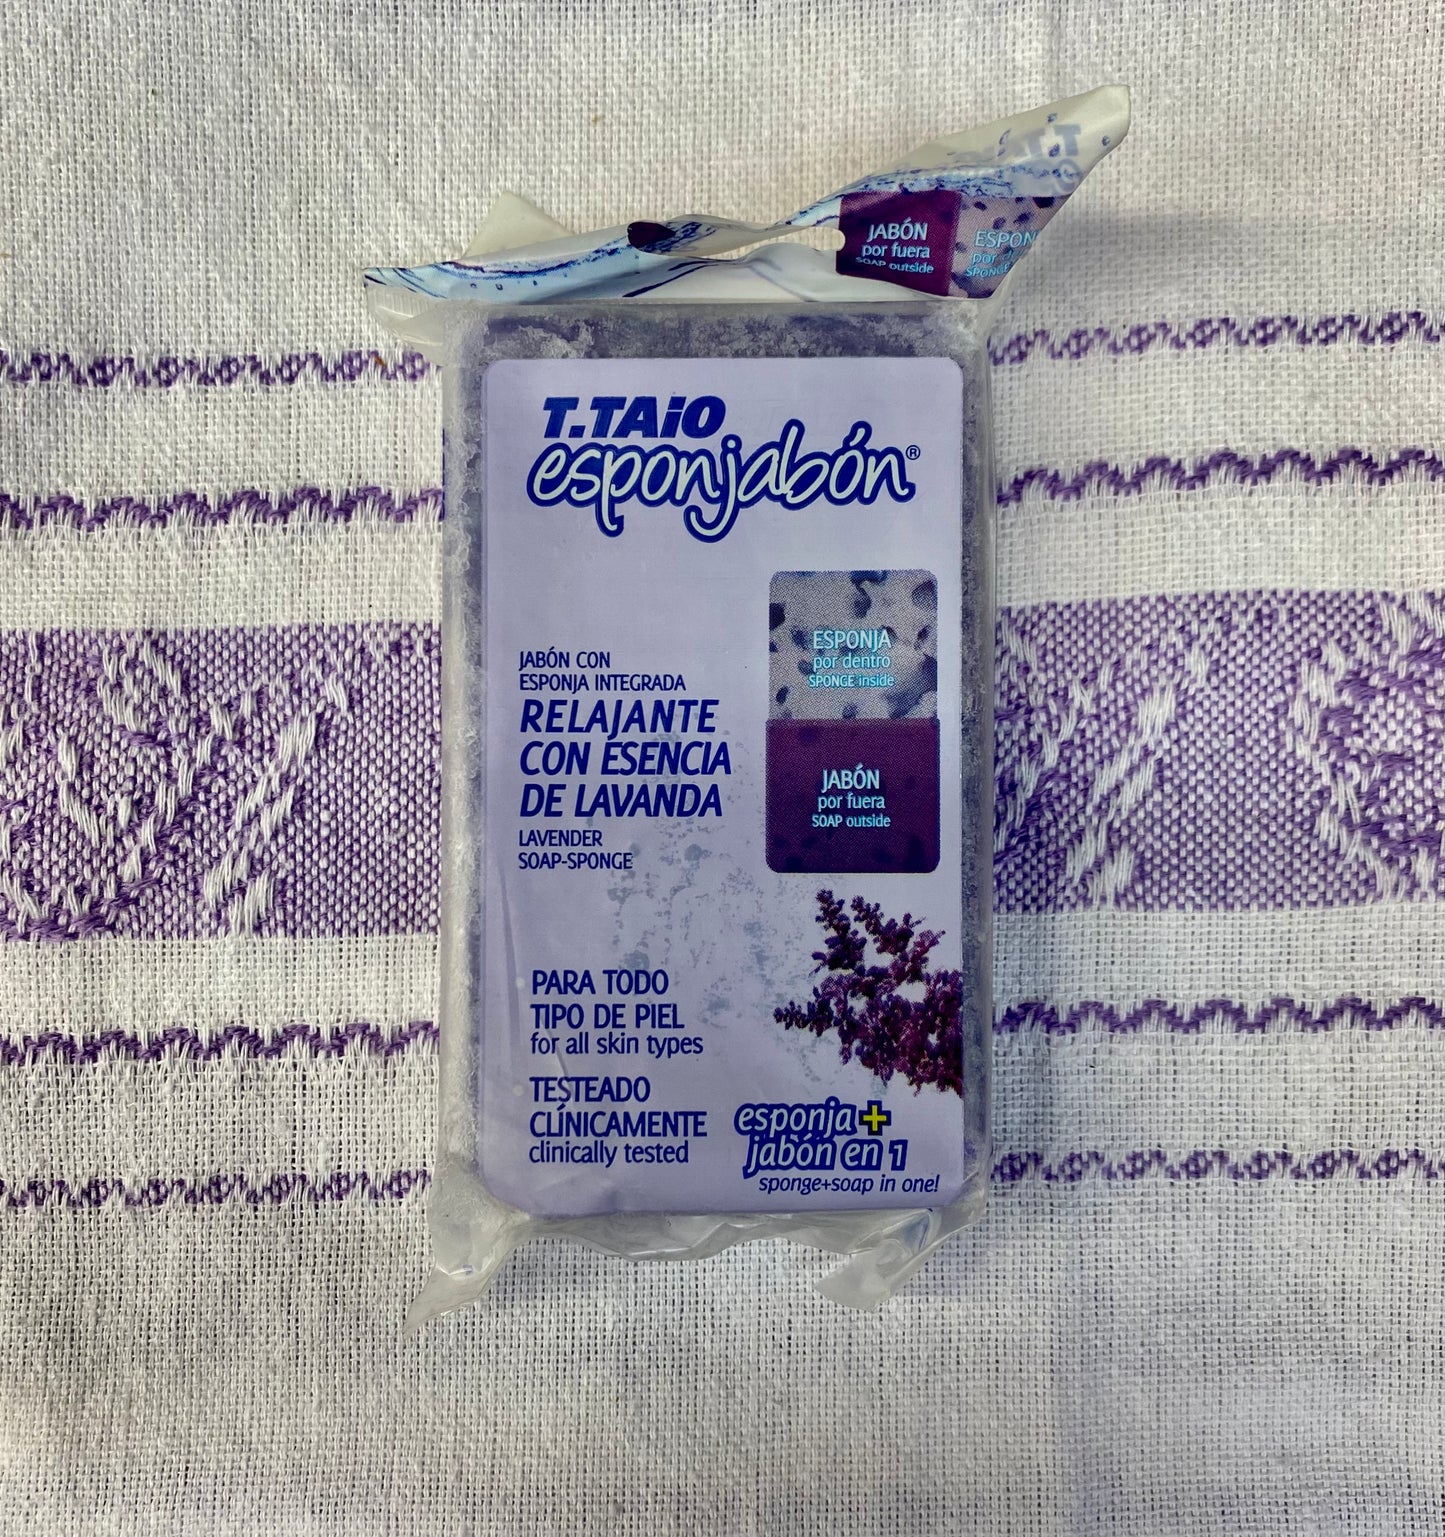 Lavanda/Lavender Esponjabon